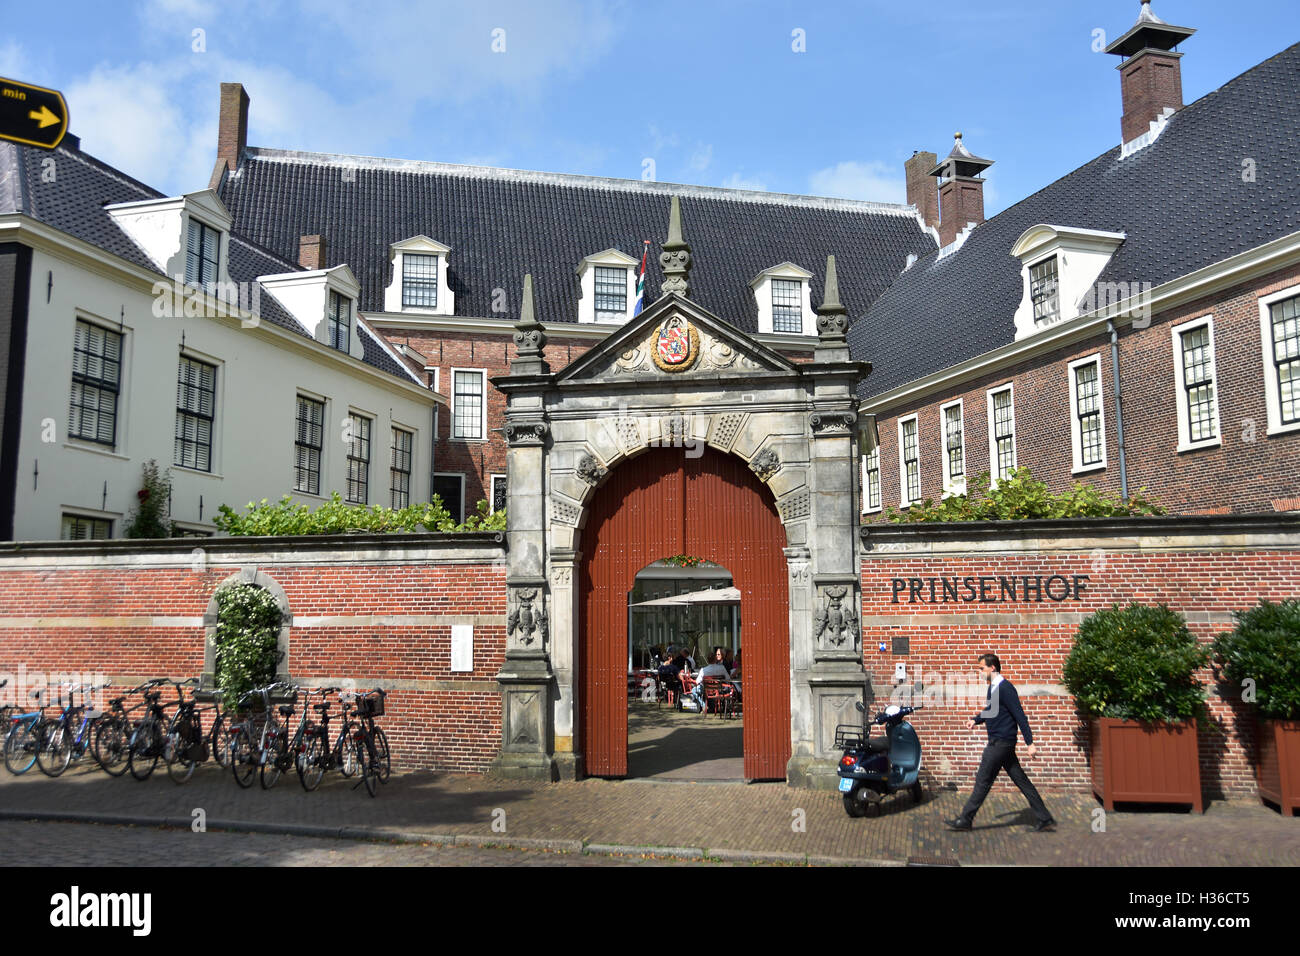 Prinsenhof Netherlands Groningen Monument Historic History   Architecture City Town Netherlands Holland Stock Photo